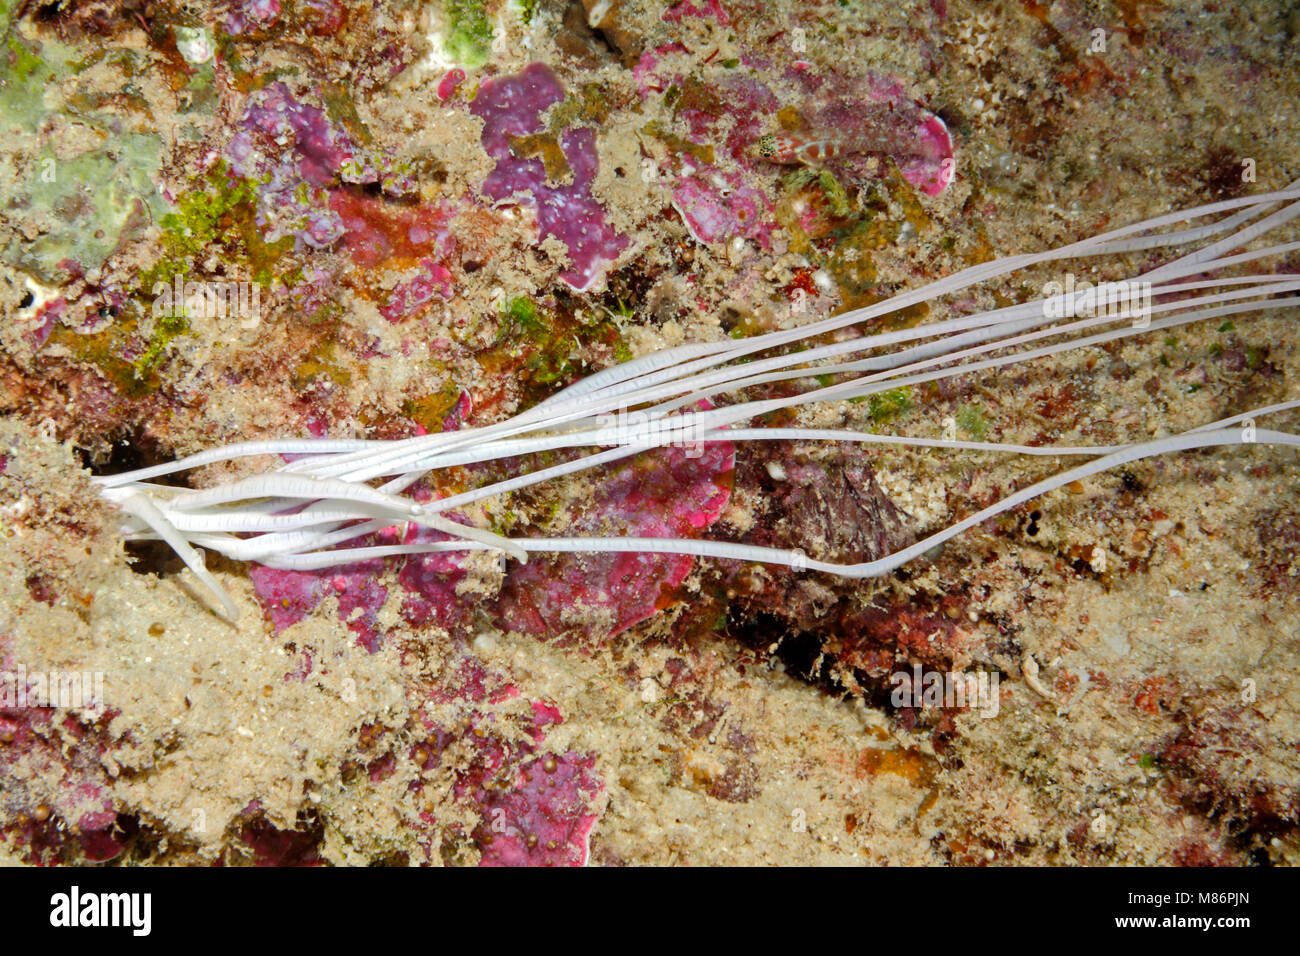 Weiße Fütterung Tentakel einer Medusa Spaghetti Wurm, Loimia medusa oder Eupolymnia crassicornis. Stockfoto